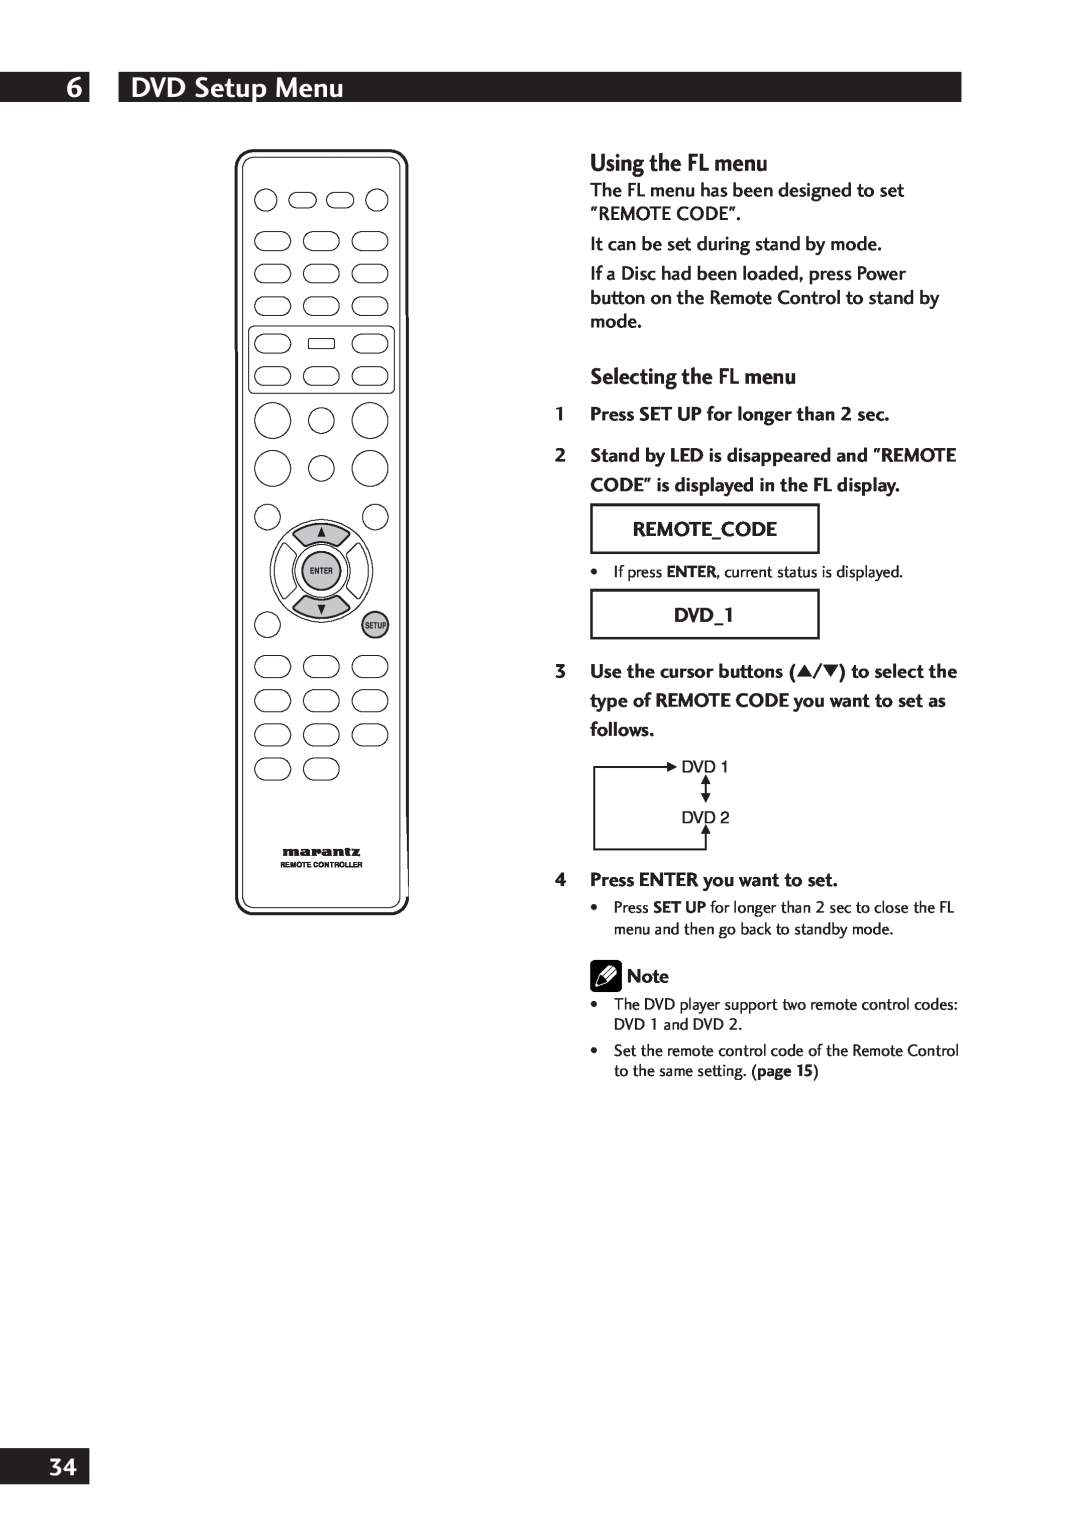 Marantz DV7001 DVD Setup Menu, Using the FL menu, Selecting the FL menu, 1Press SET UP for longer than 2 sec, Remote Code 